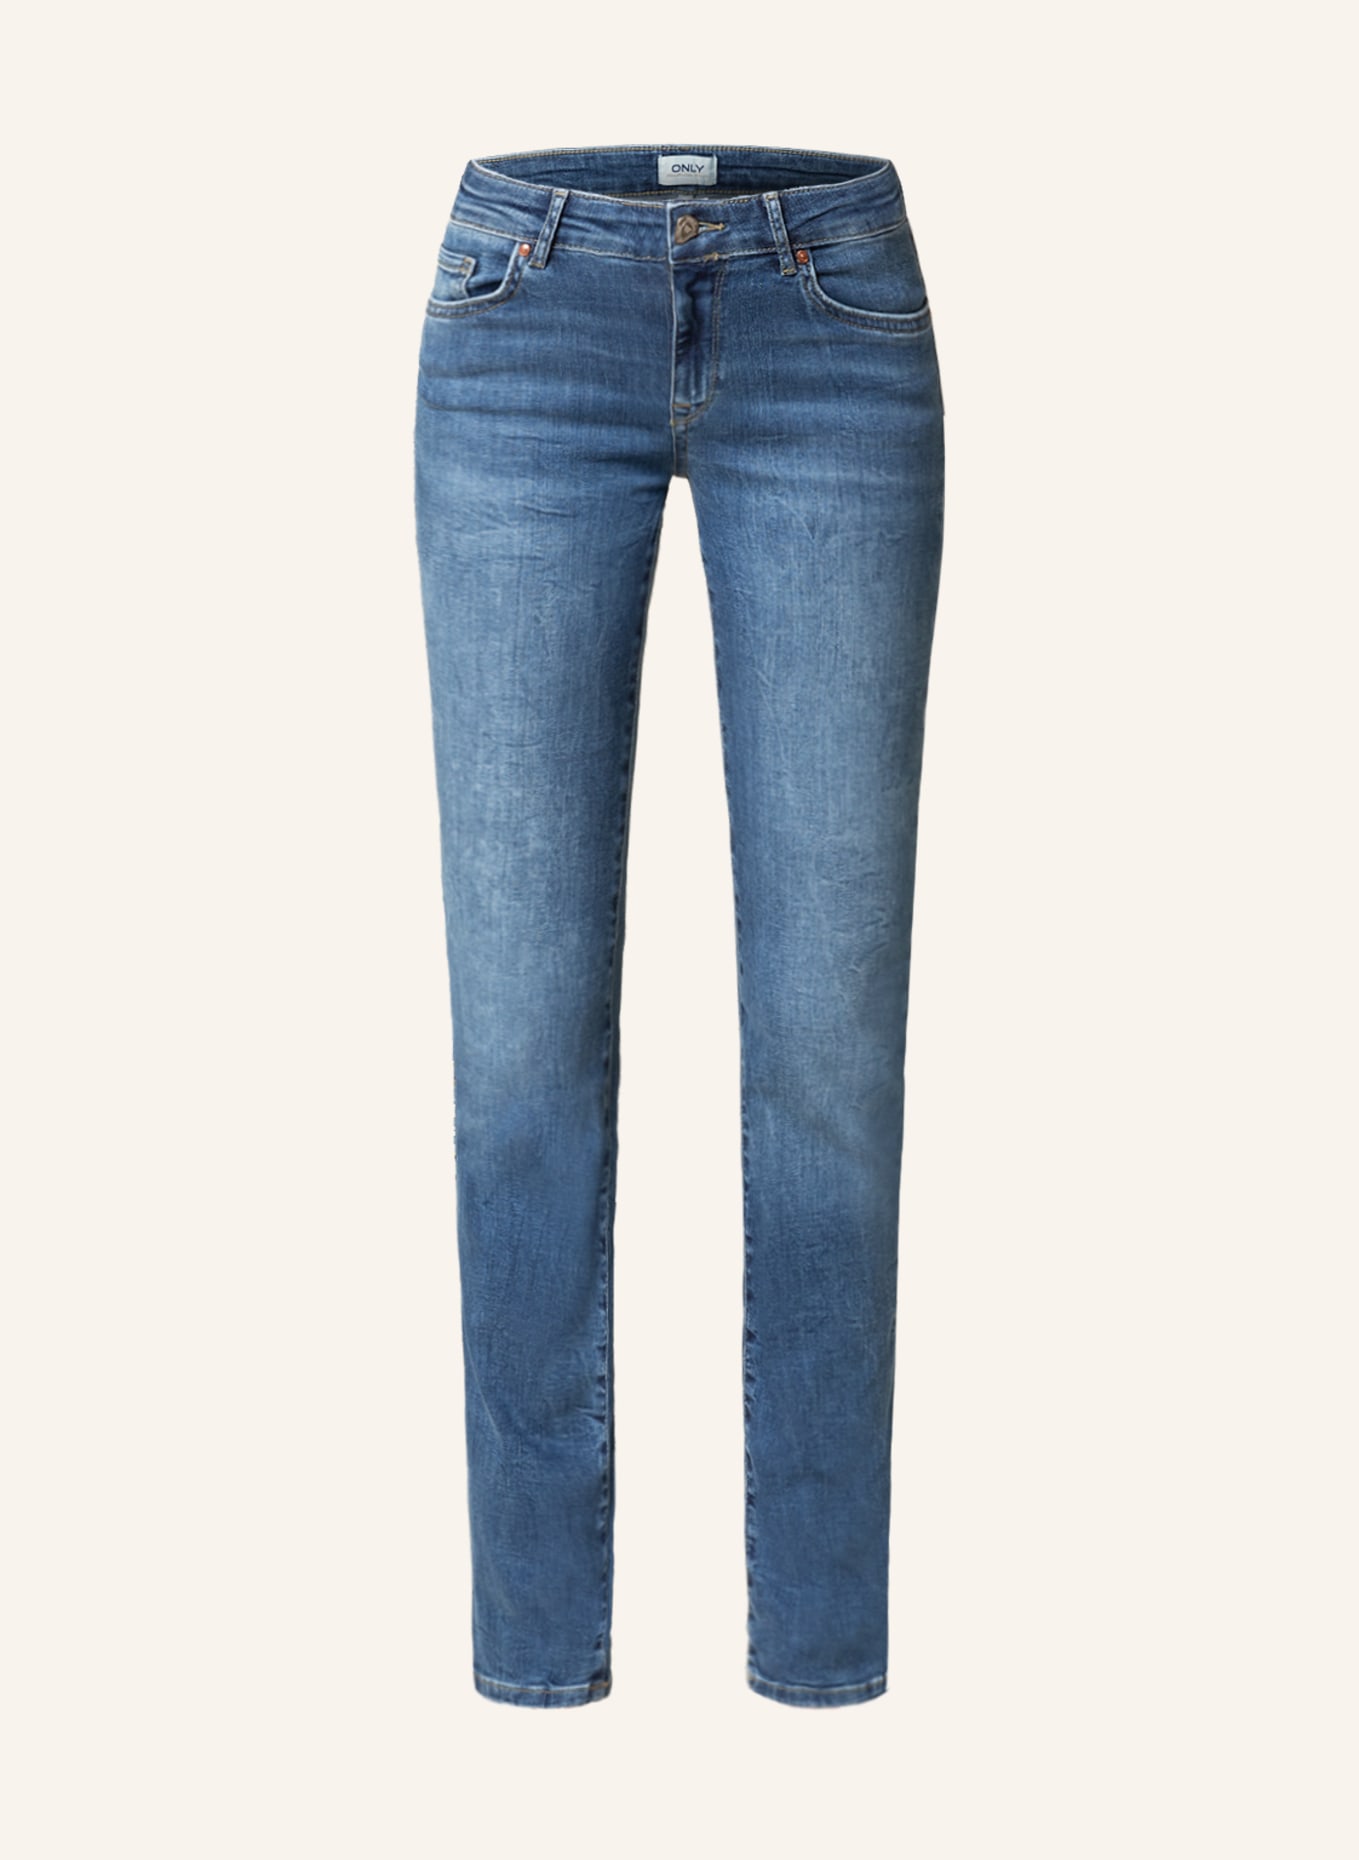 ONLY Staight Jeans ONLALICIA, Farbe: MEDIUM BLUE DENIM (Bild 1)